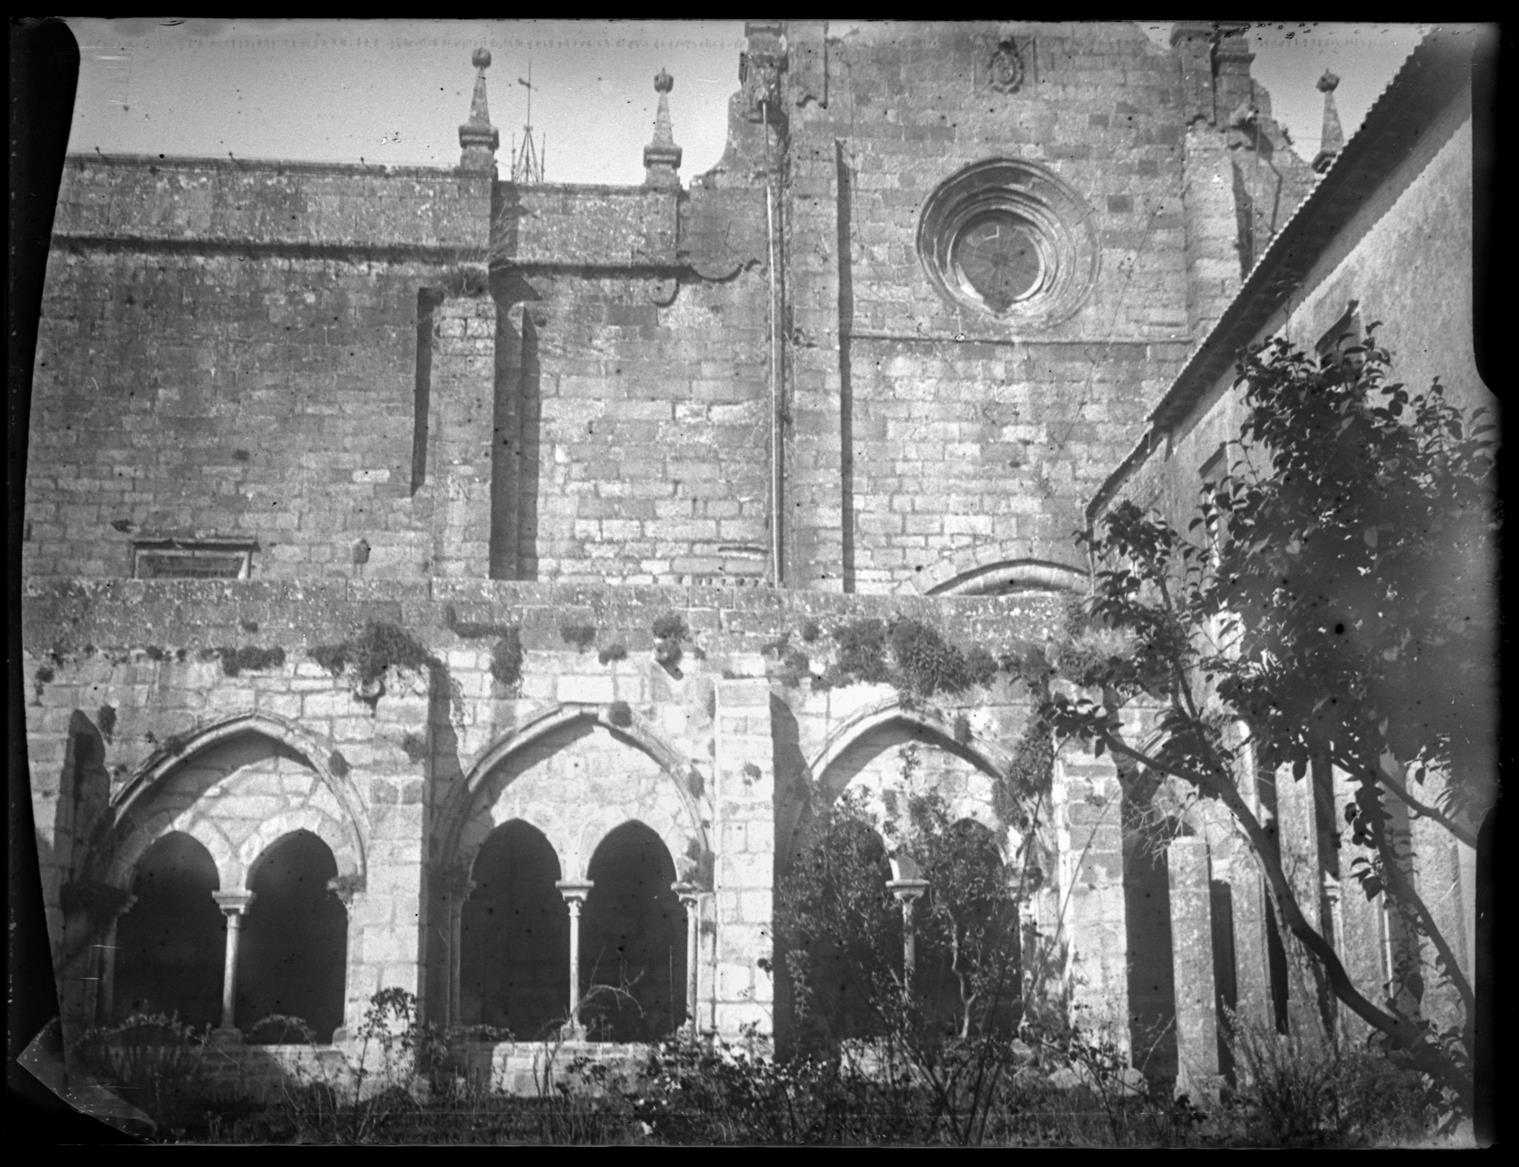 Burgos : claustros da catedral